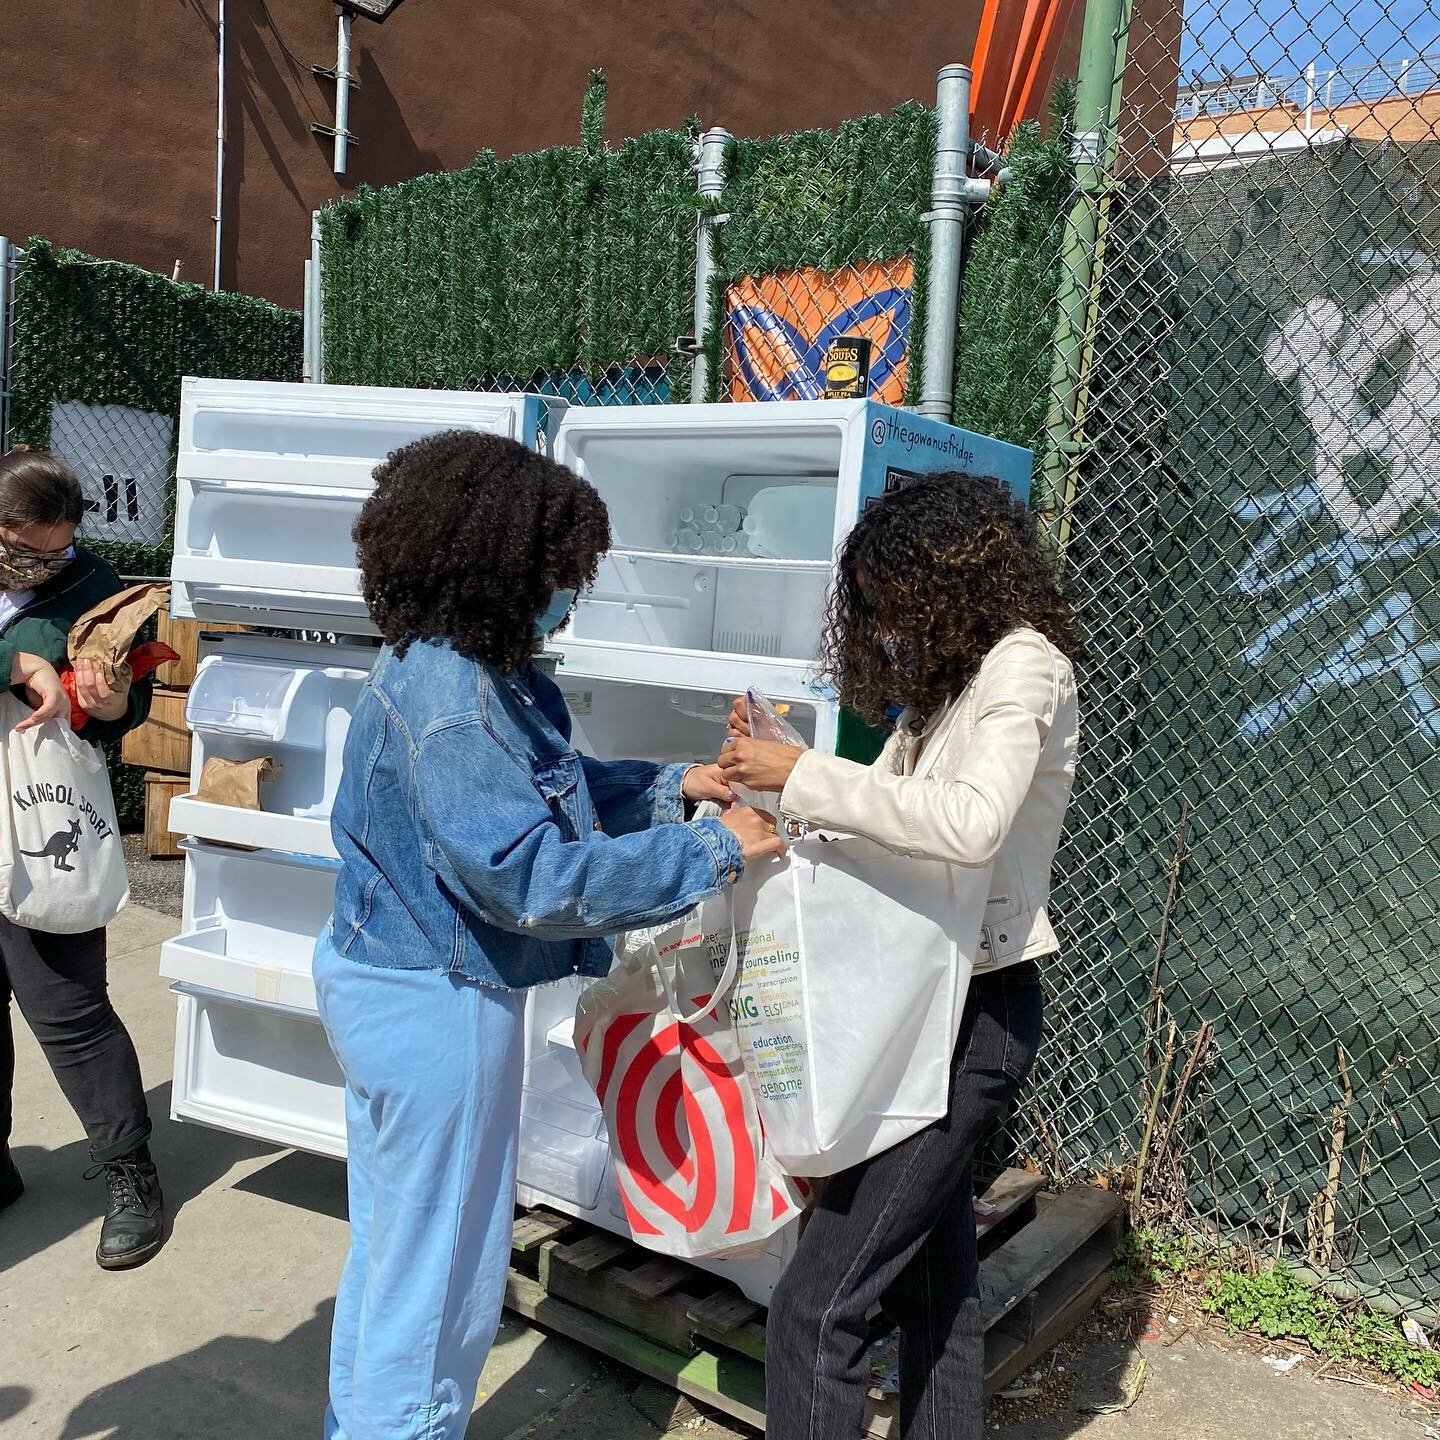 Filling up the Nature Based Fridge in Gowanus, Brooklyn! 

#community #communityactivist #communitysupport #activism #friendsandfridges